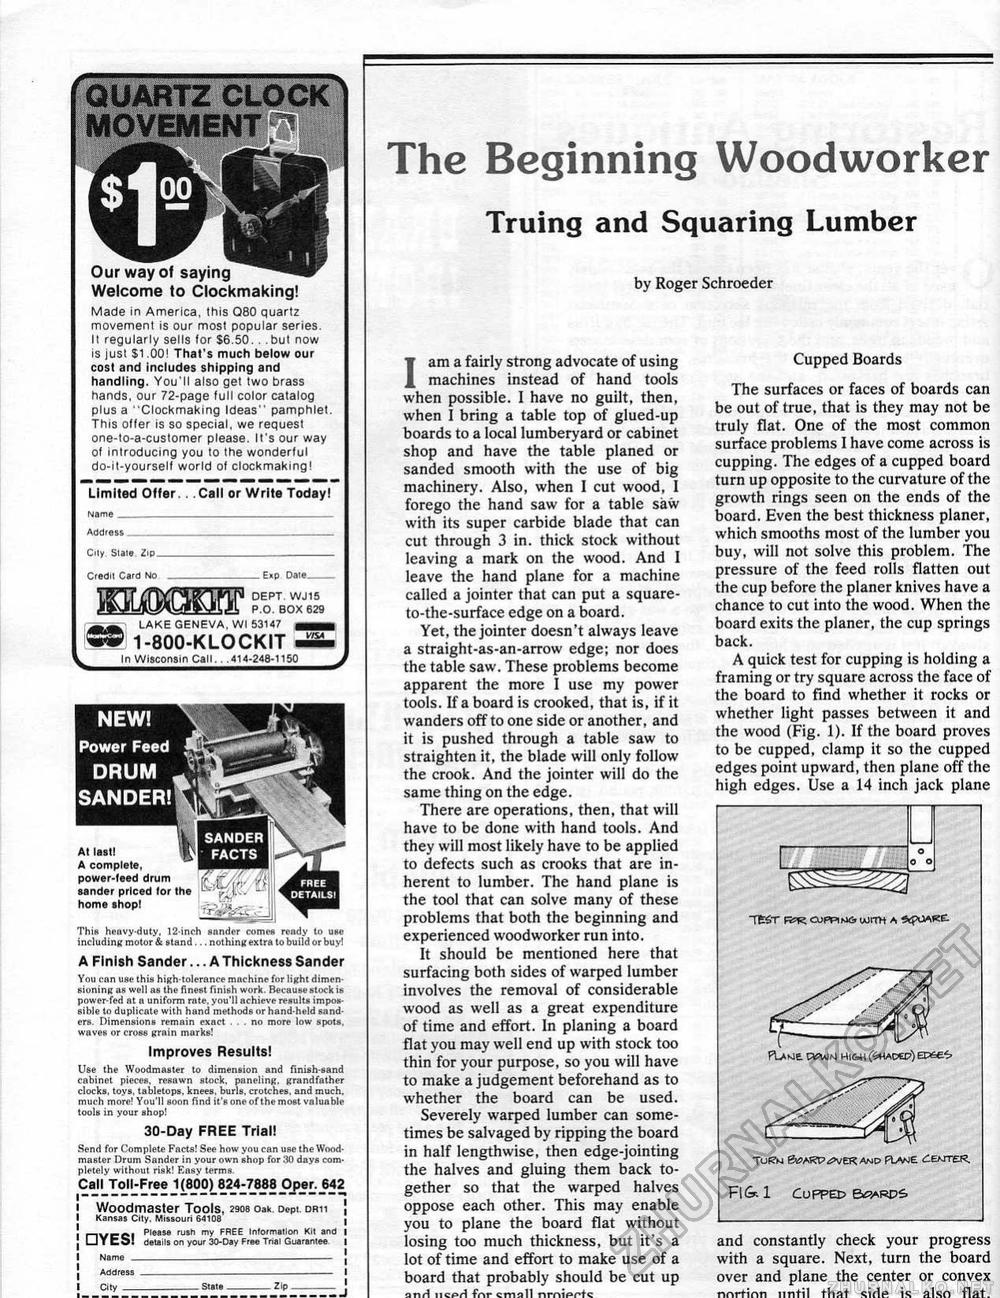 Woodworker